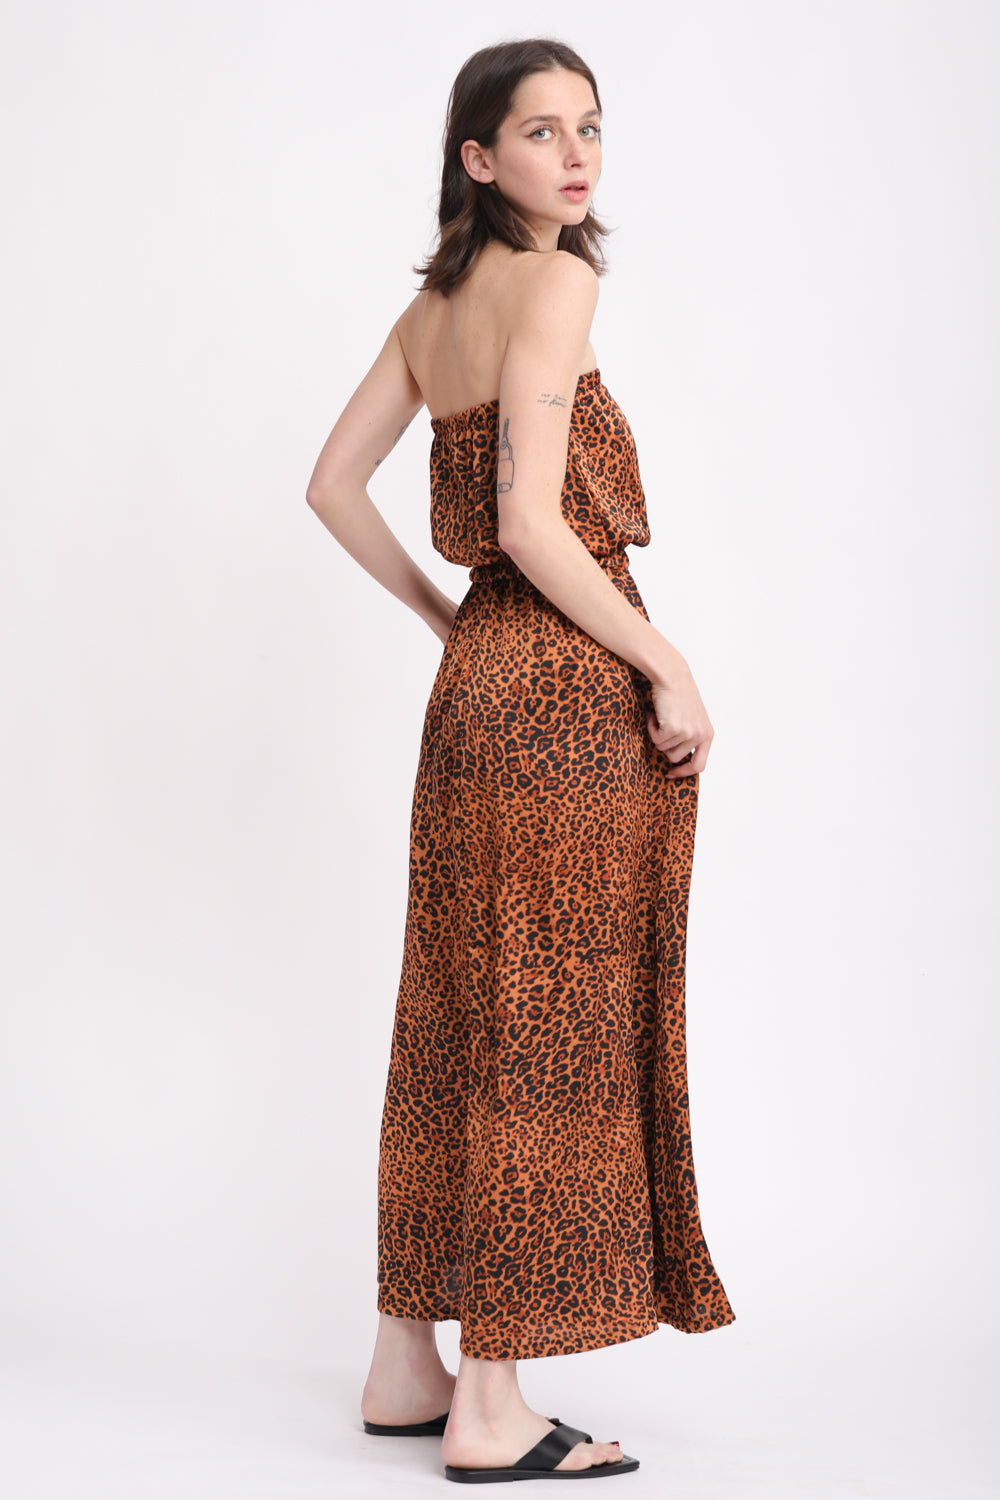 Her Strapless Leopard Dress